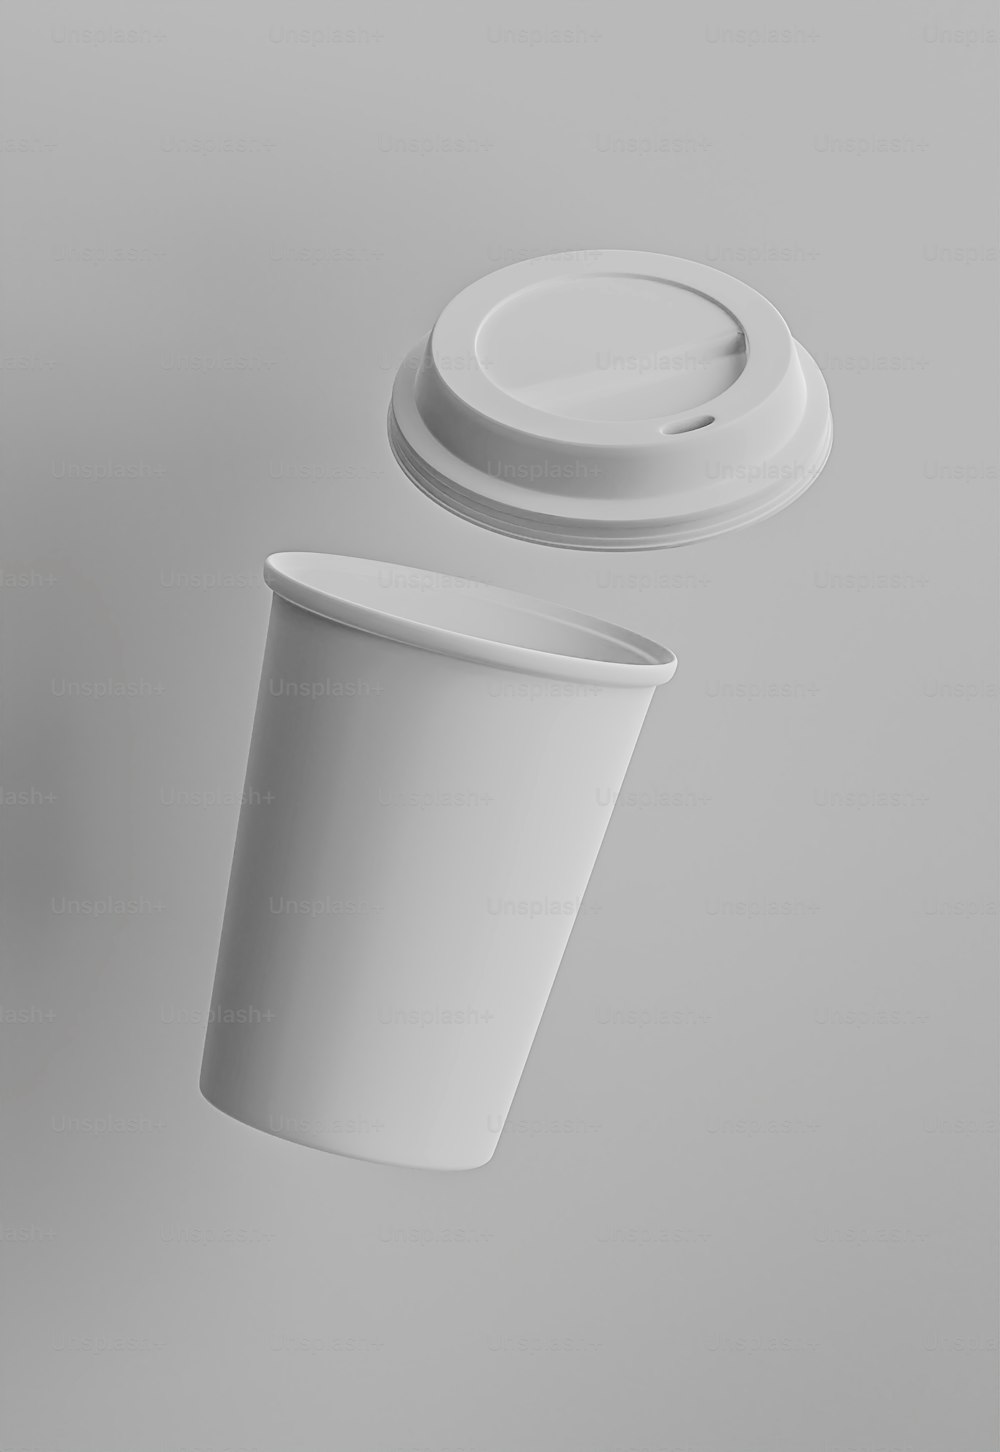 una taza blanca con tapa y una taza blanca con tapa